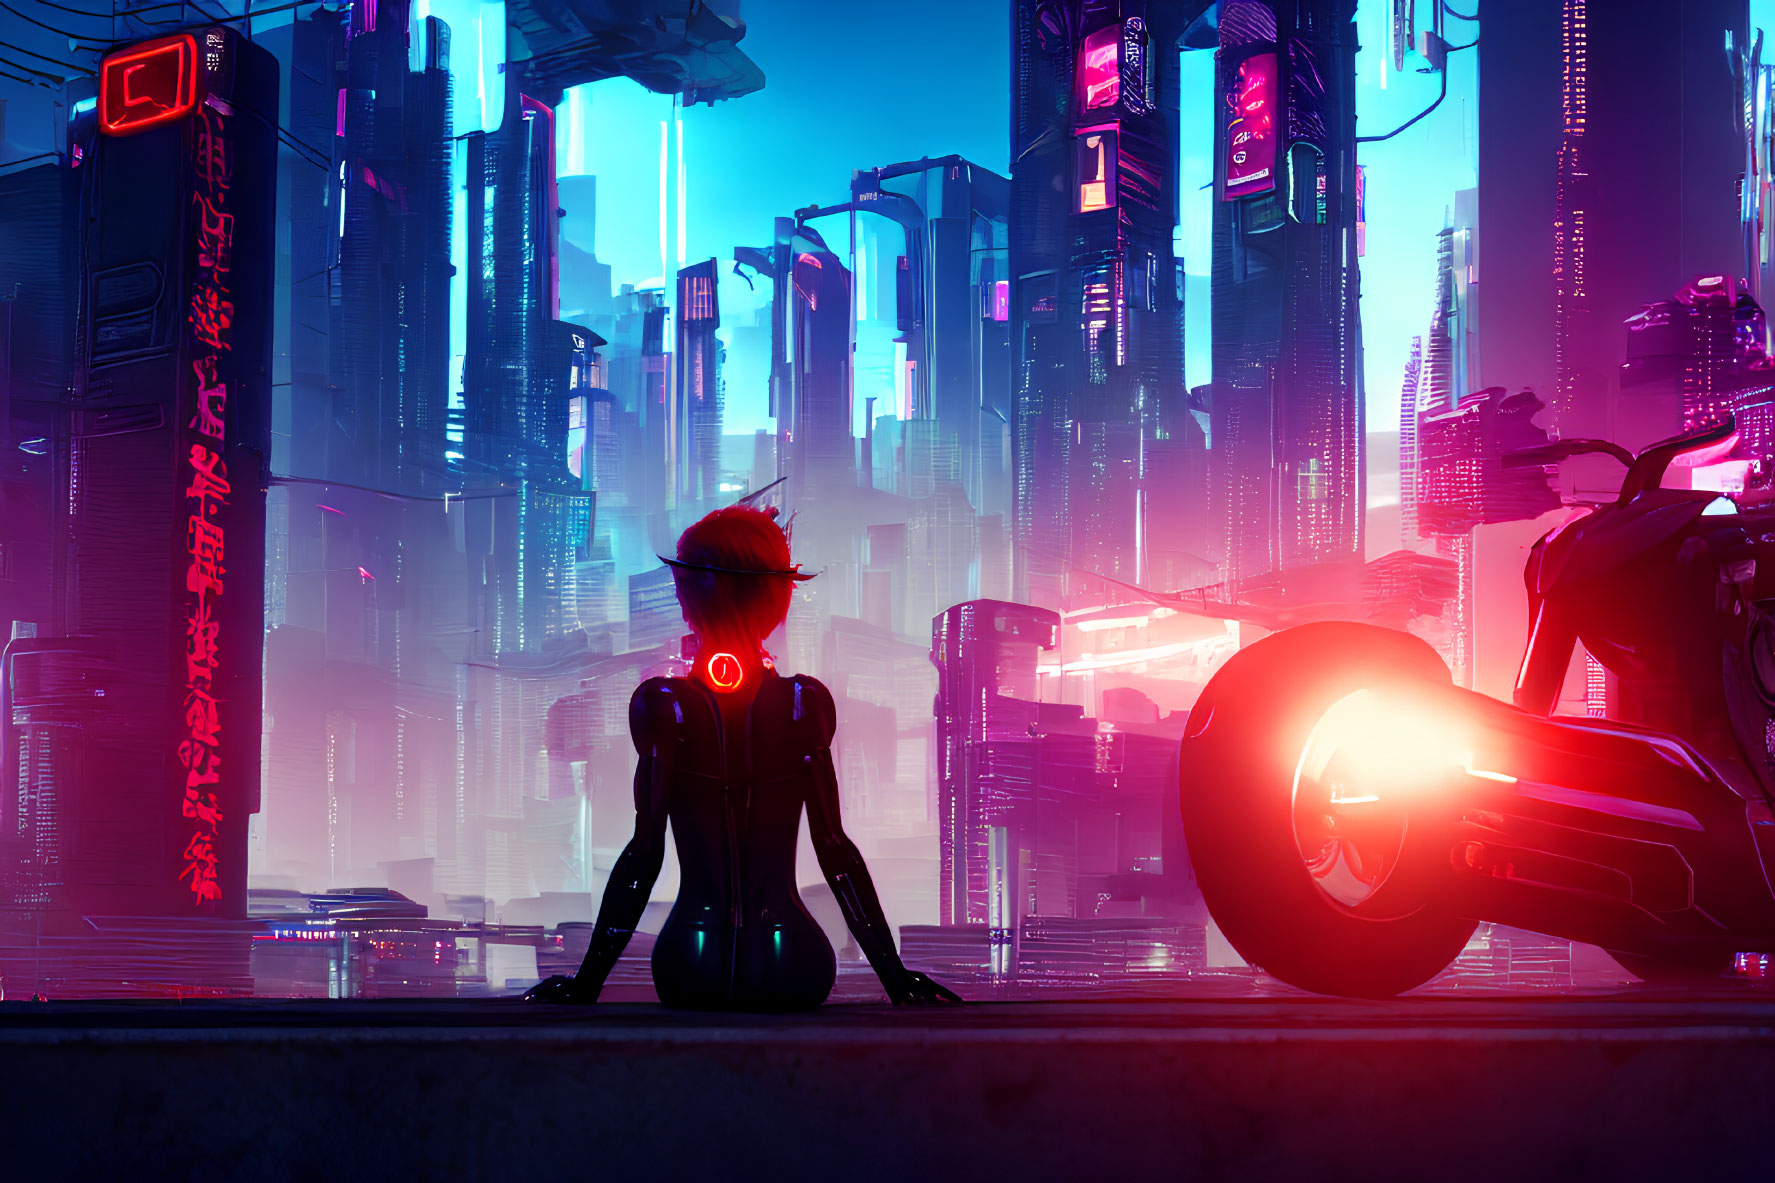 Futuristic person in suit with helmet in neon-lit cyberpunk cityscape